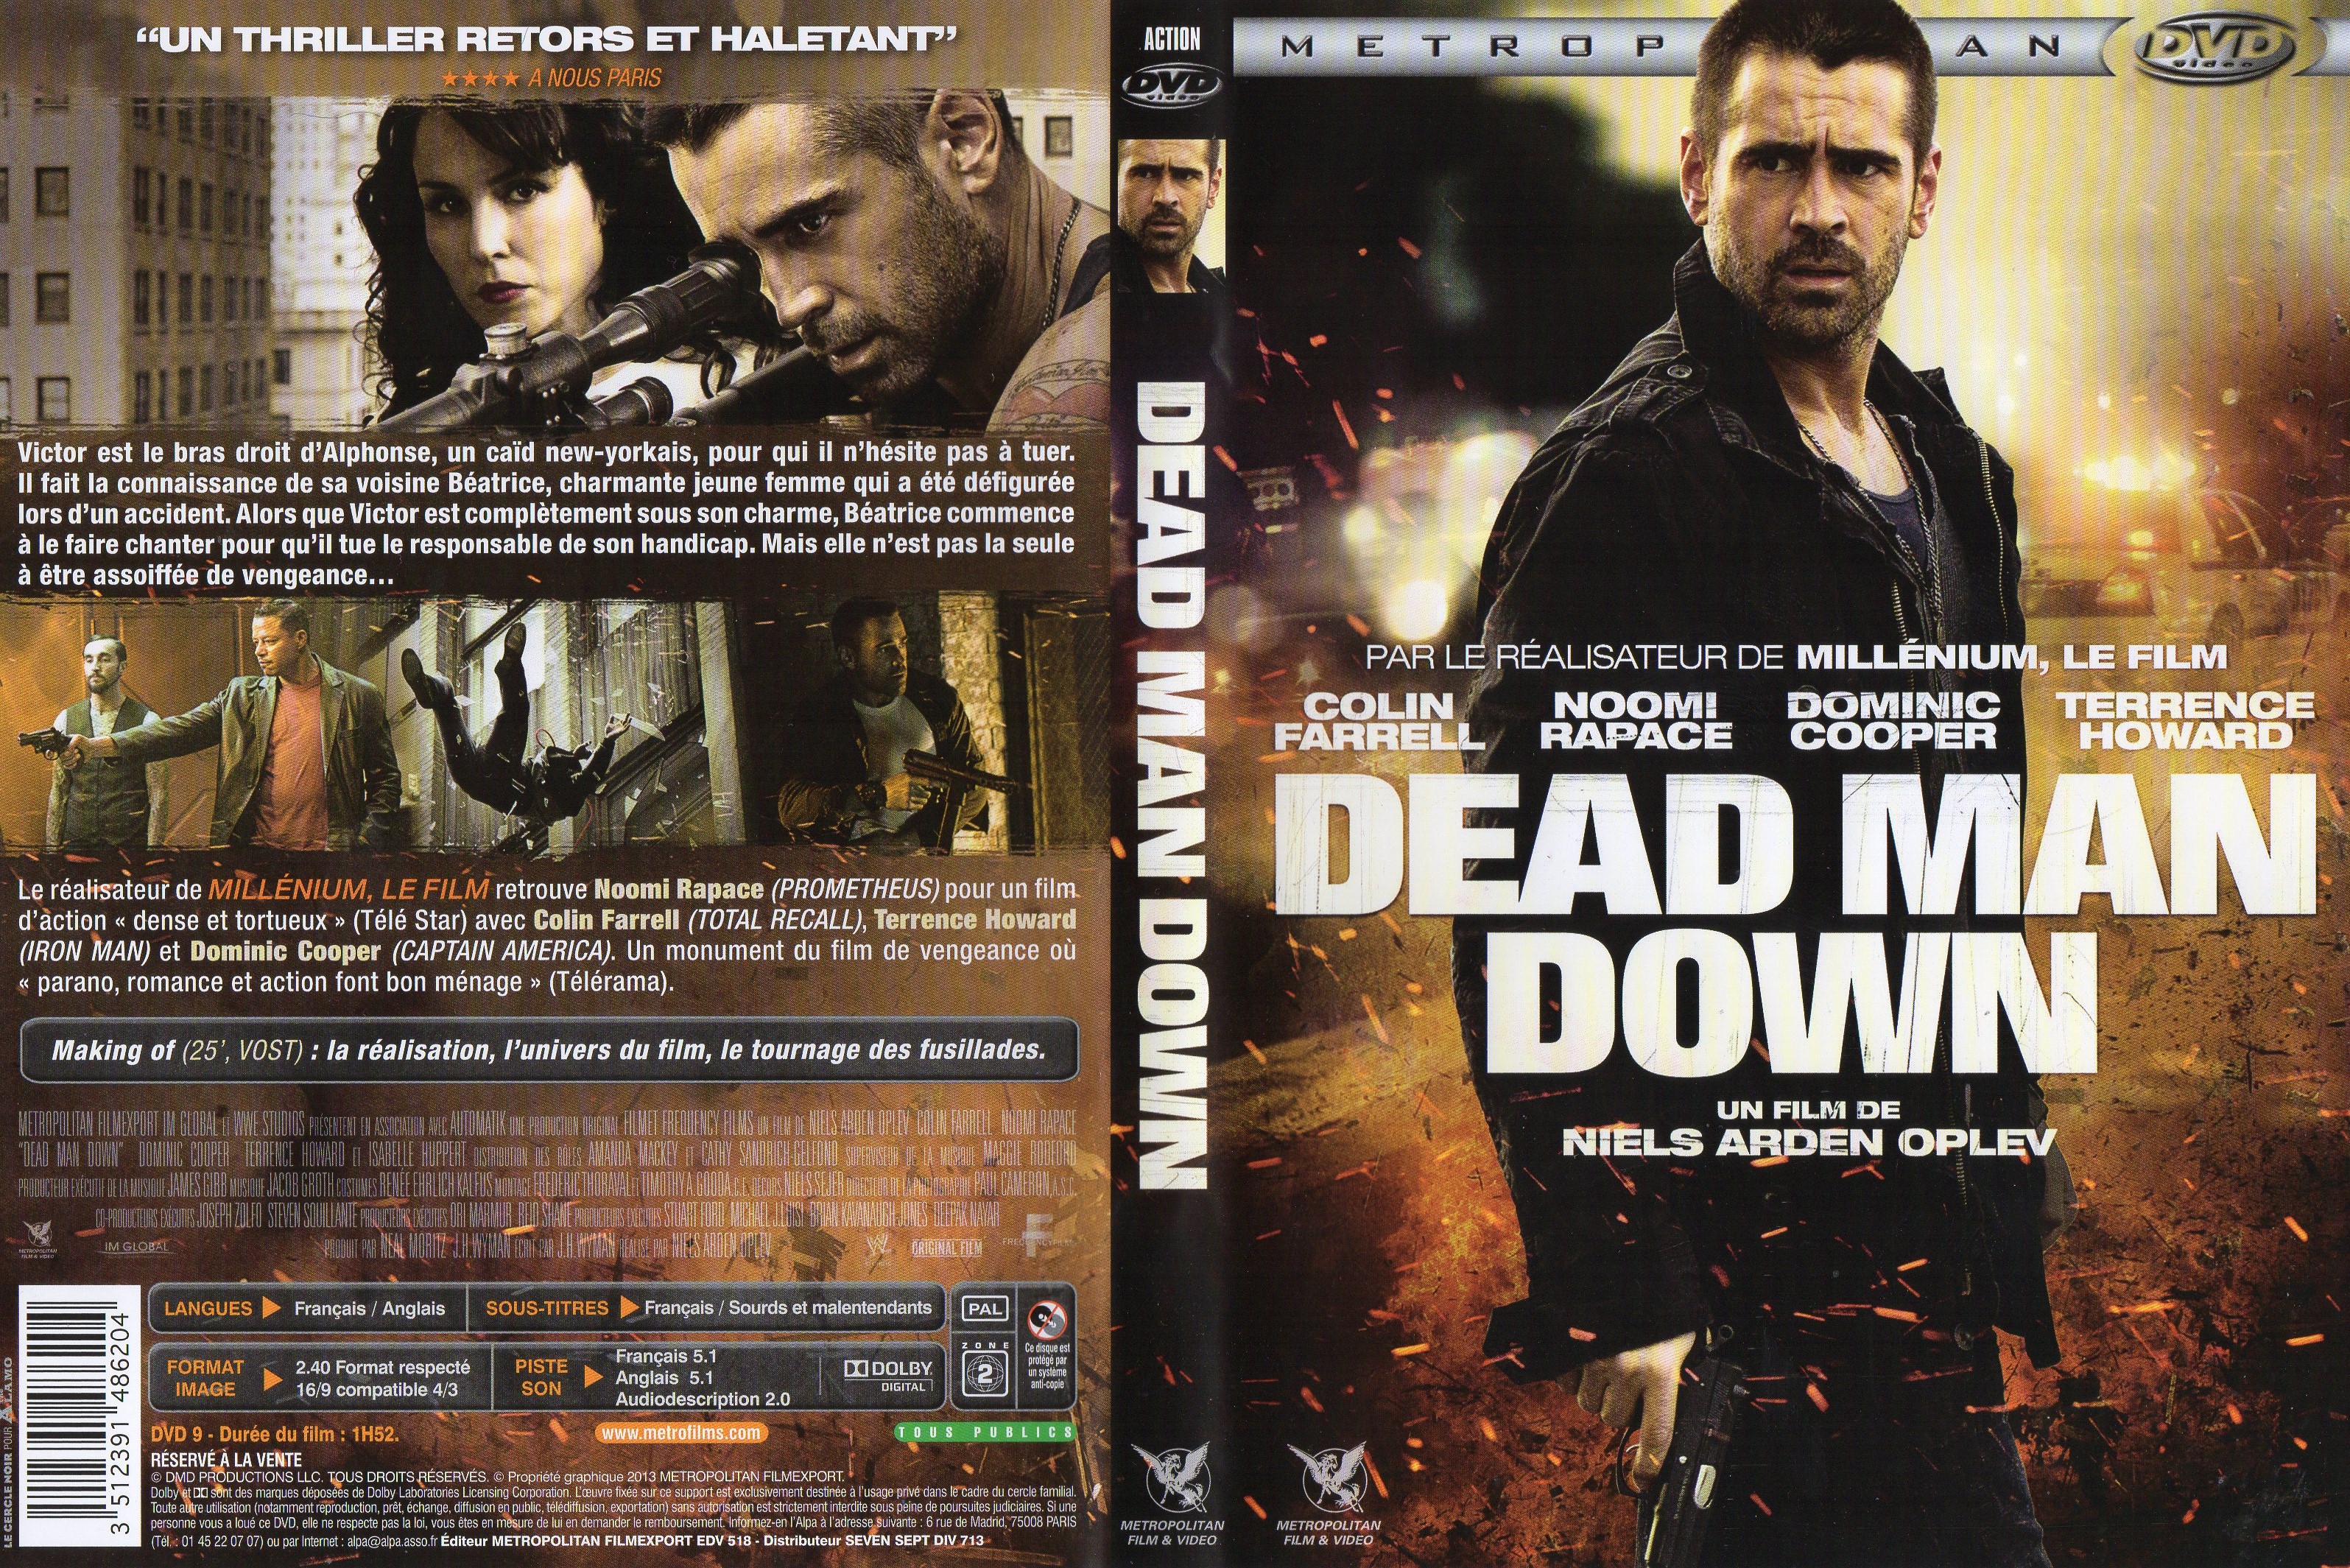 Jaquette DVD Dead Man Down v2